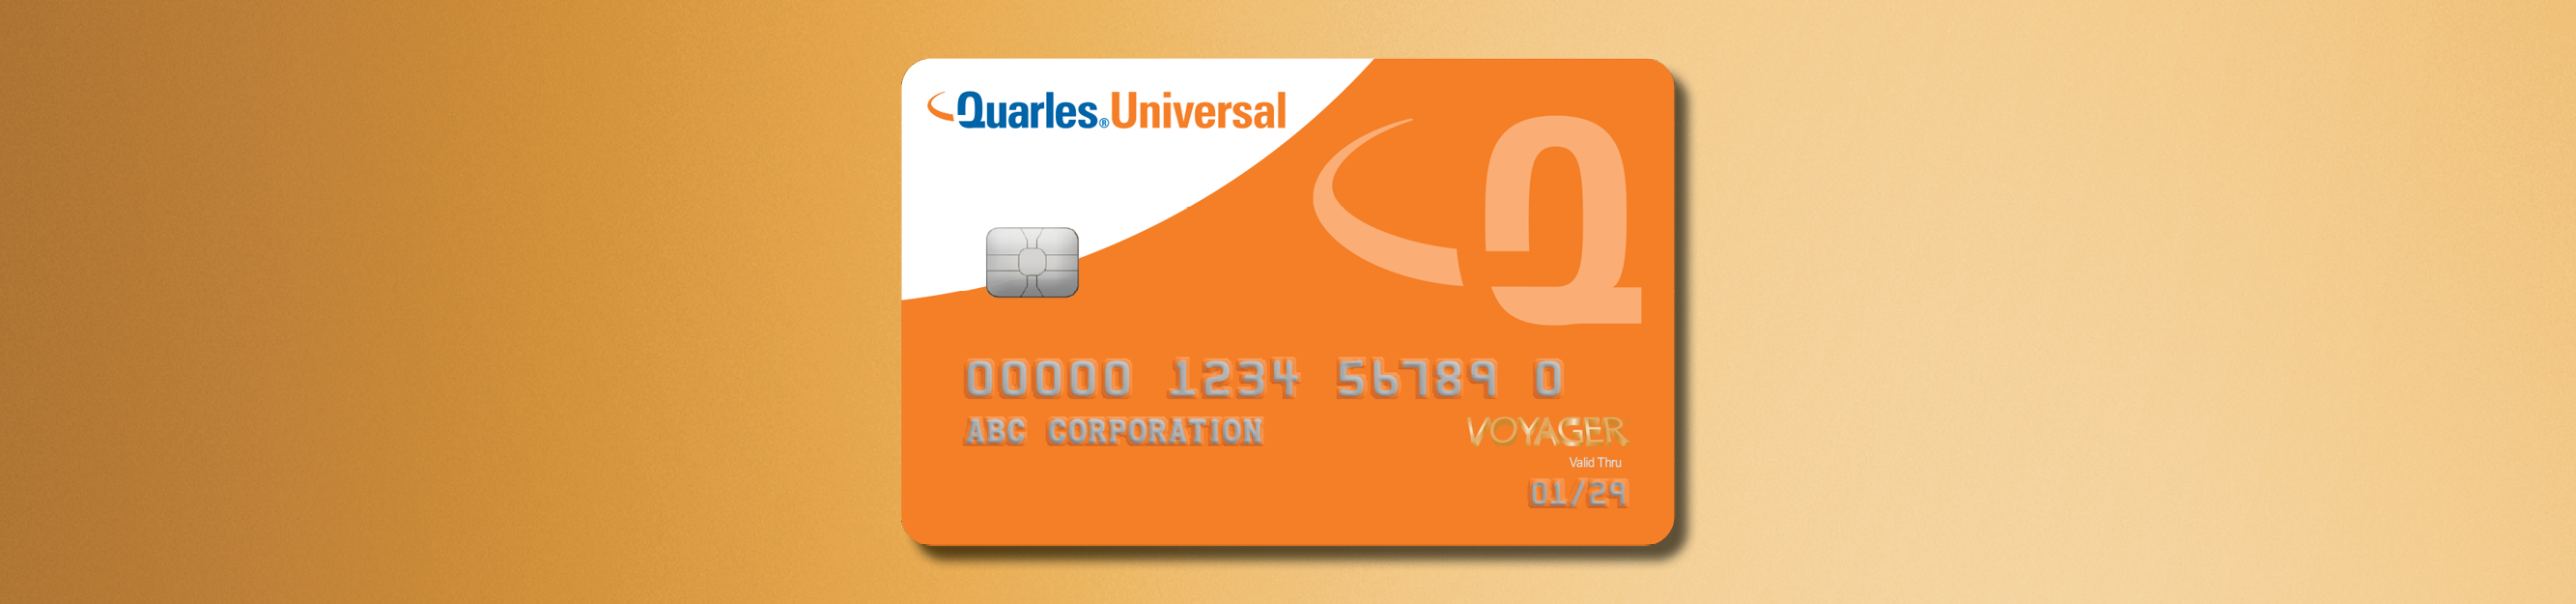 Universal Card Customers